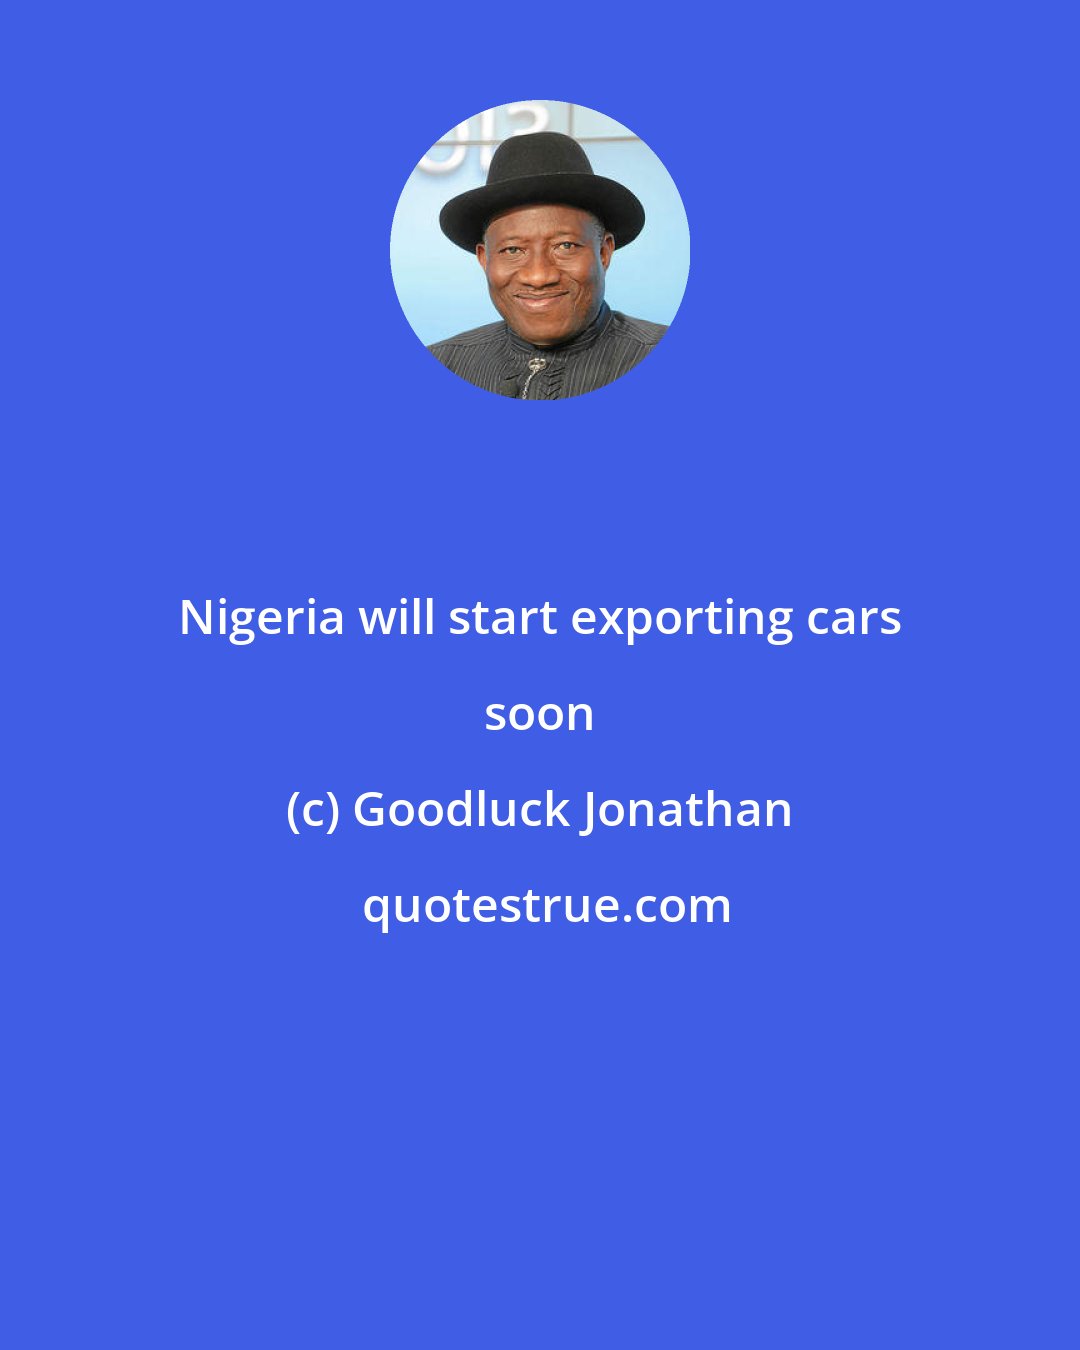 Goodluck Jonathan: Nigeria will start exporting cars soon